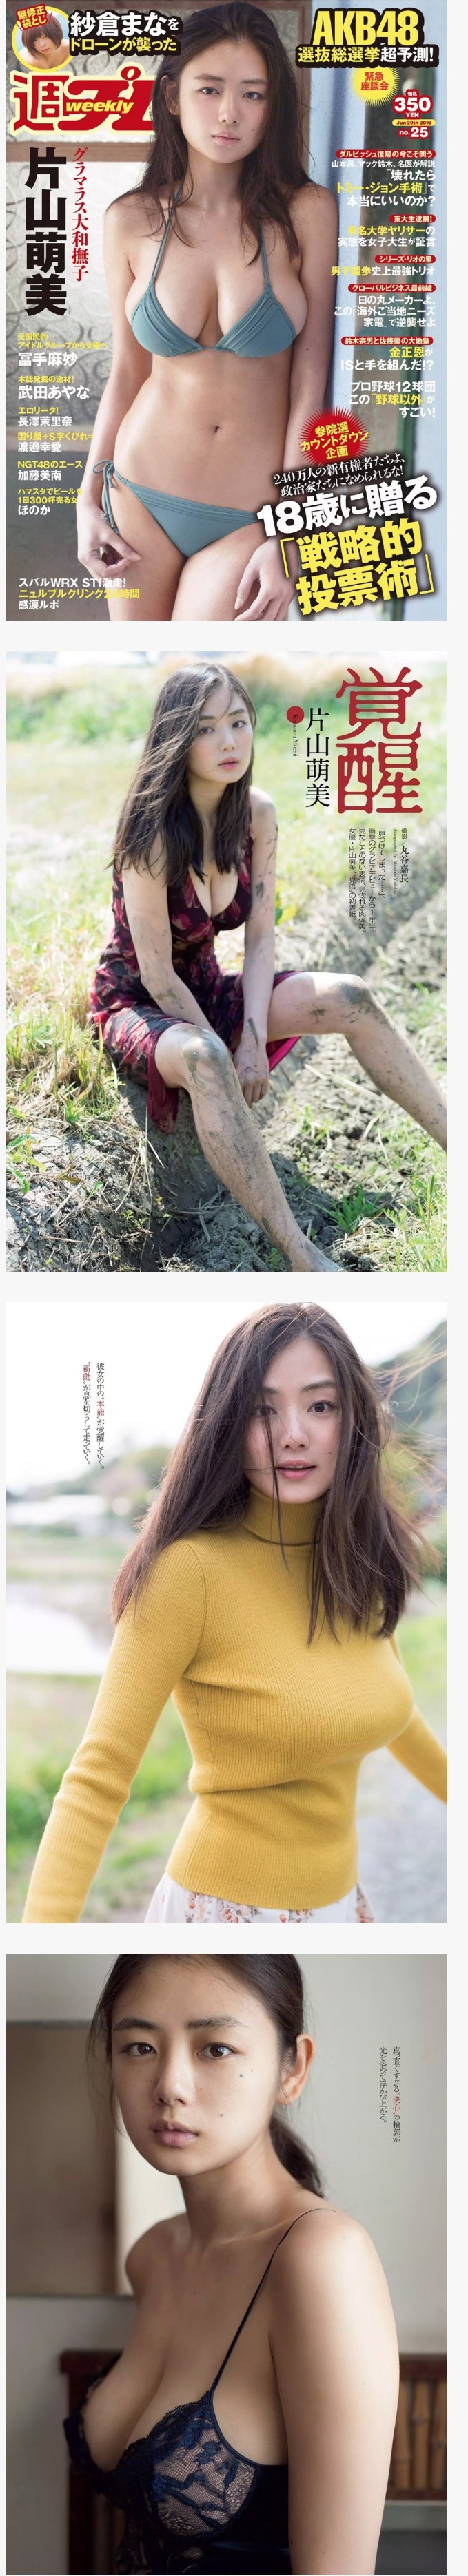 G Cup gravure model and actress Moemi Katayama